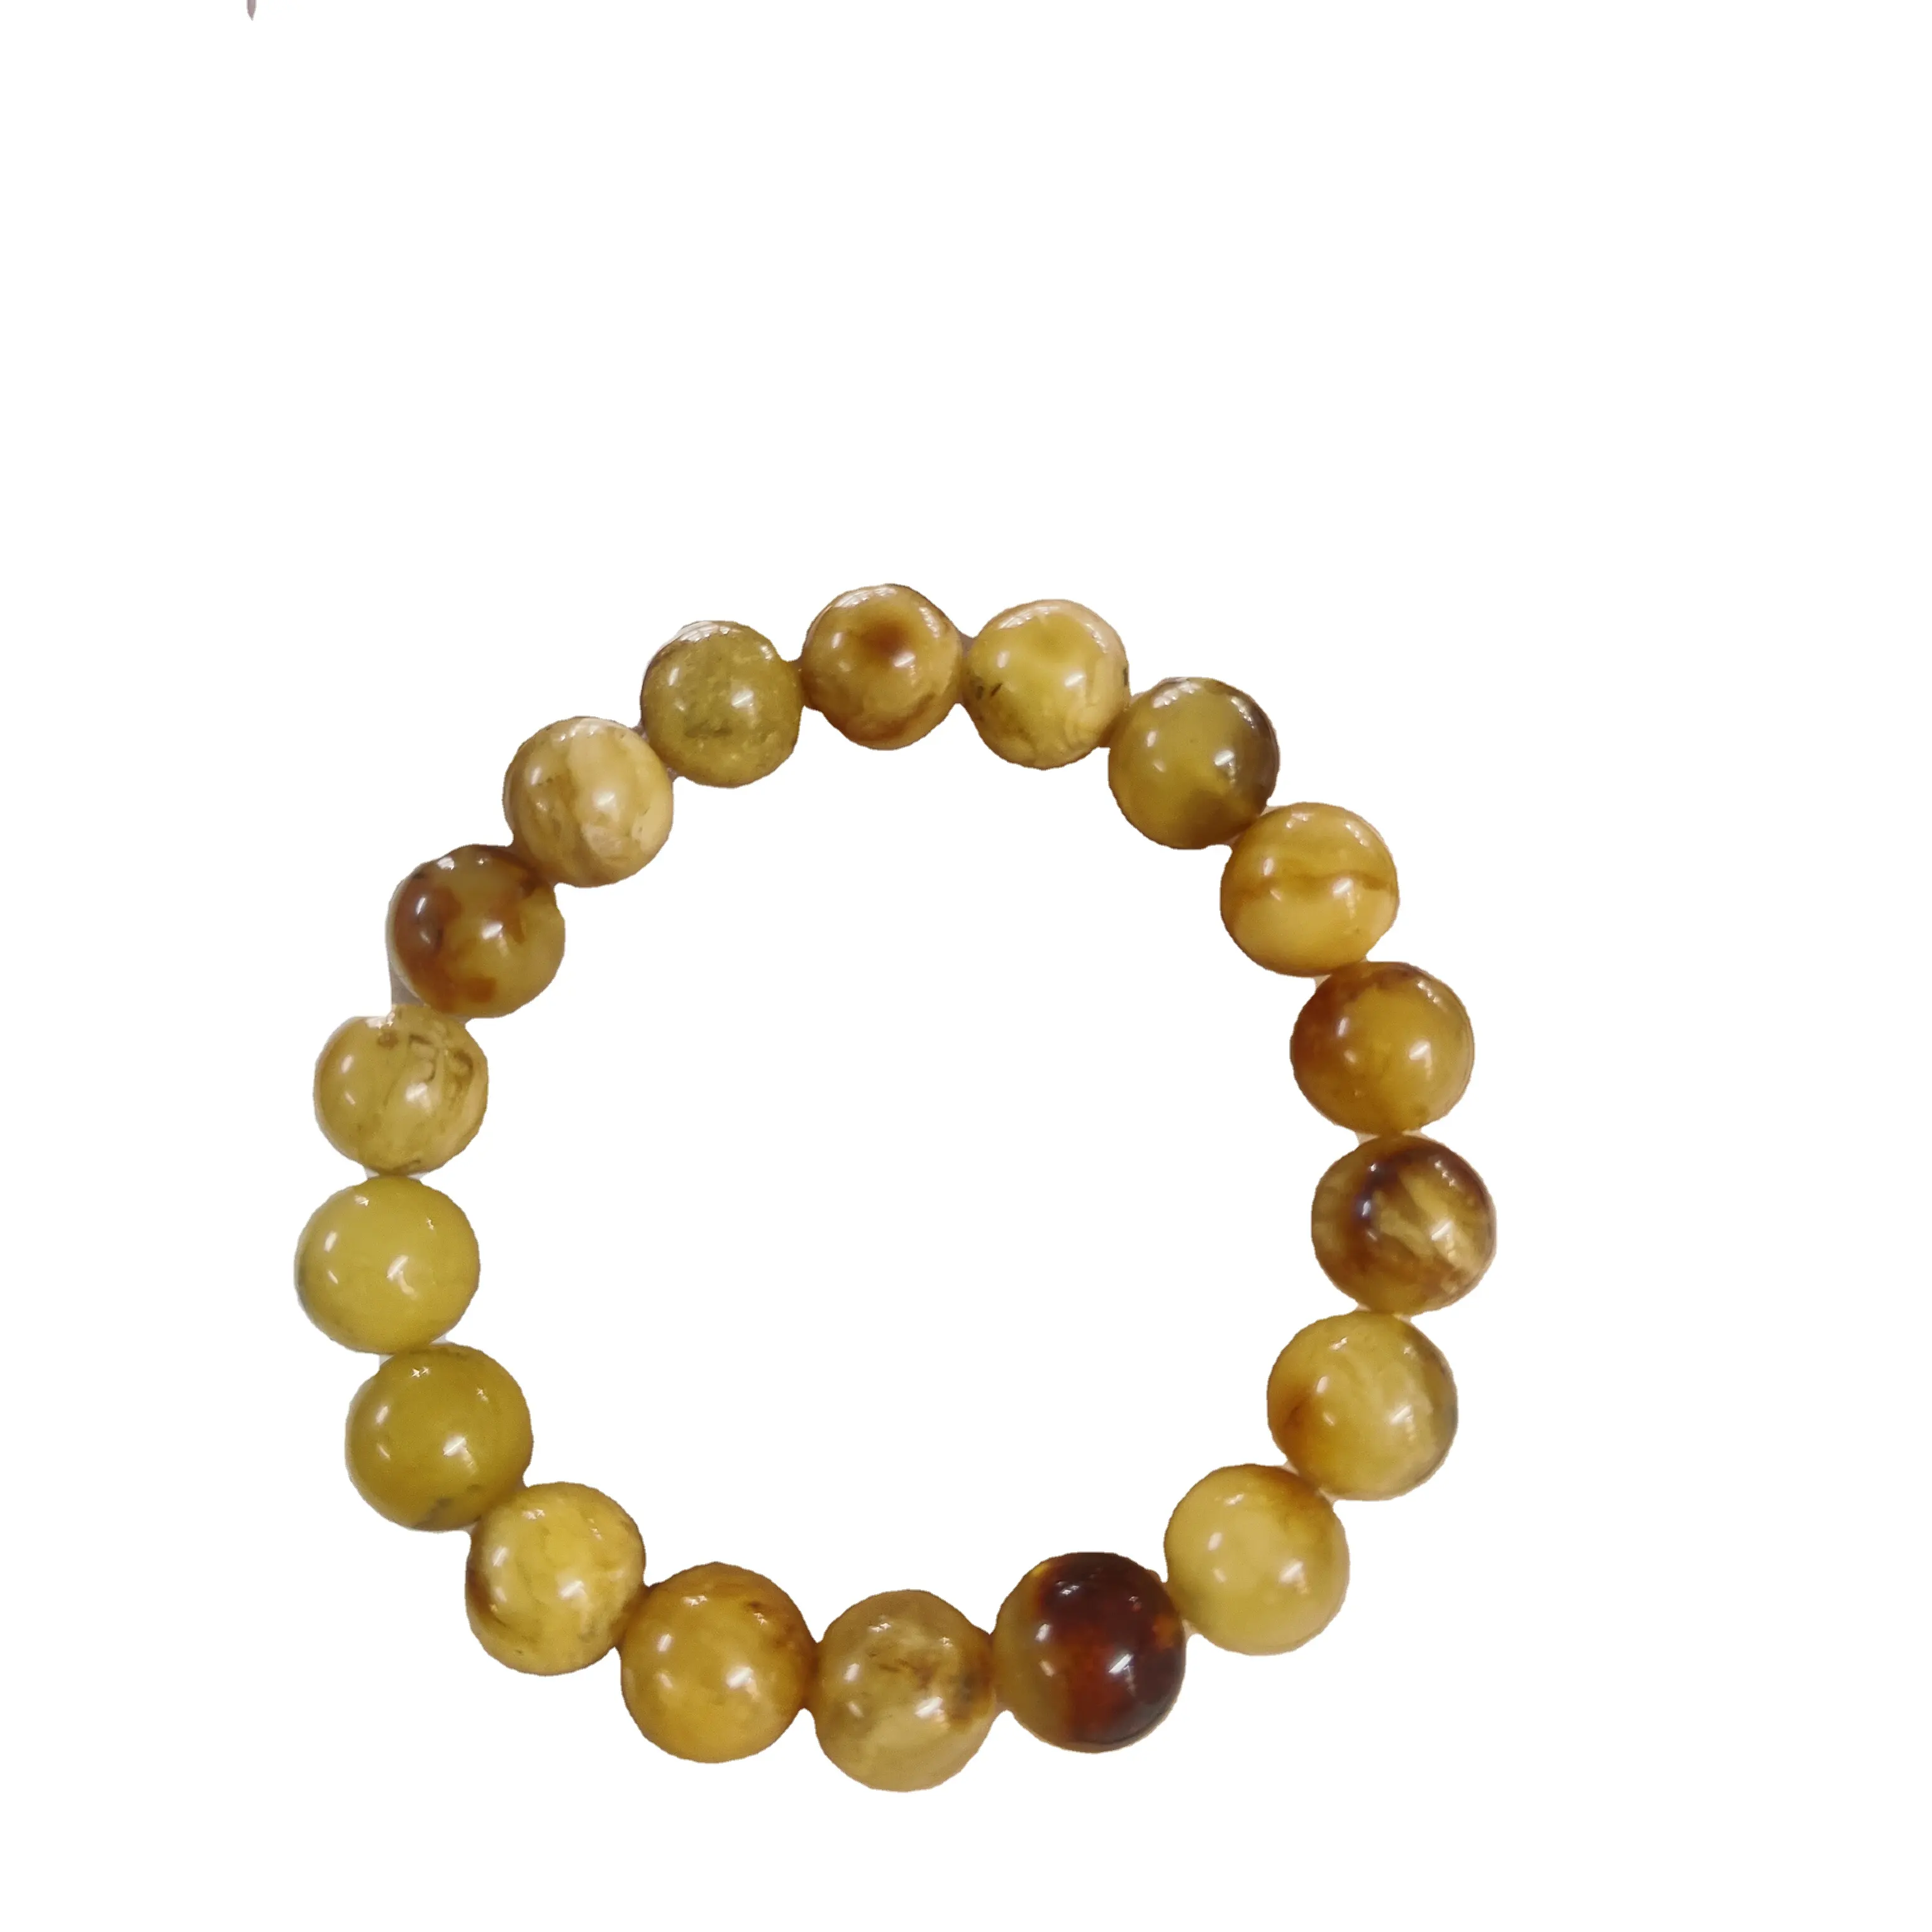 Baltik Amber batu permata kualitas alami 6.8mm potongan bulat longgar batu permata manik untuk membuat perhiasan